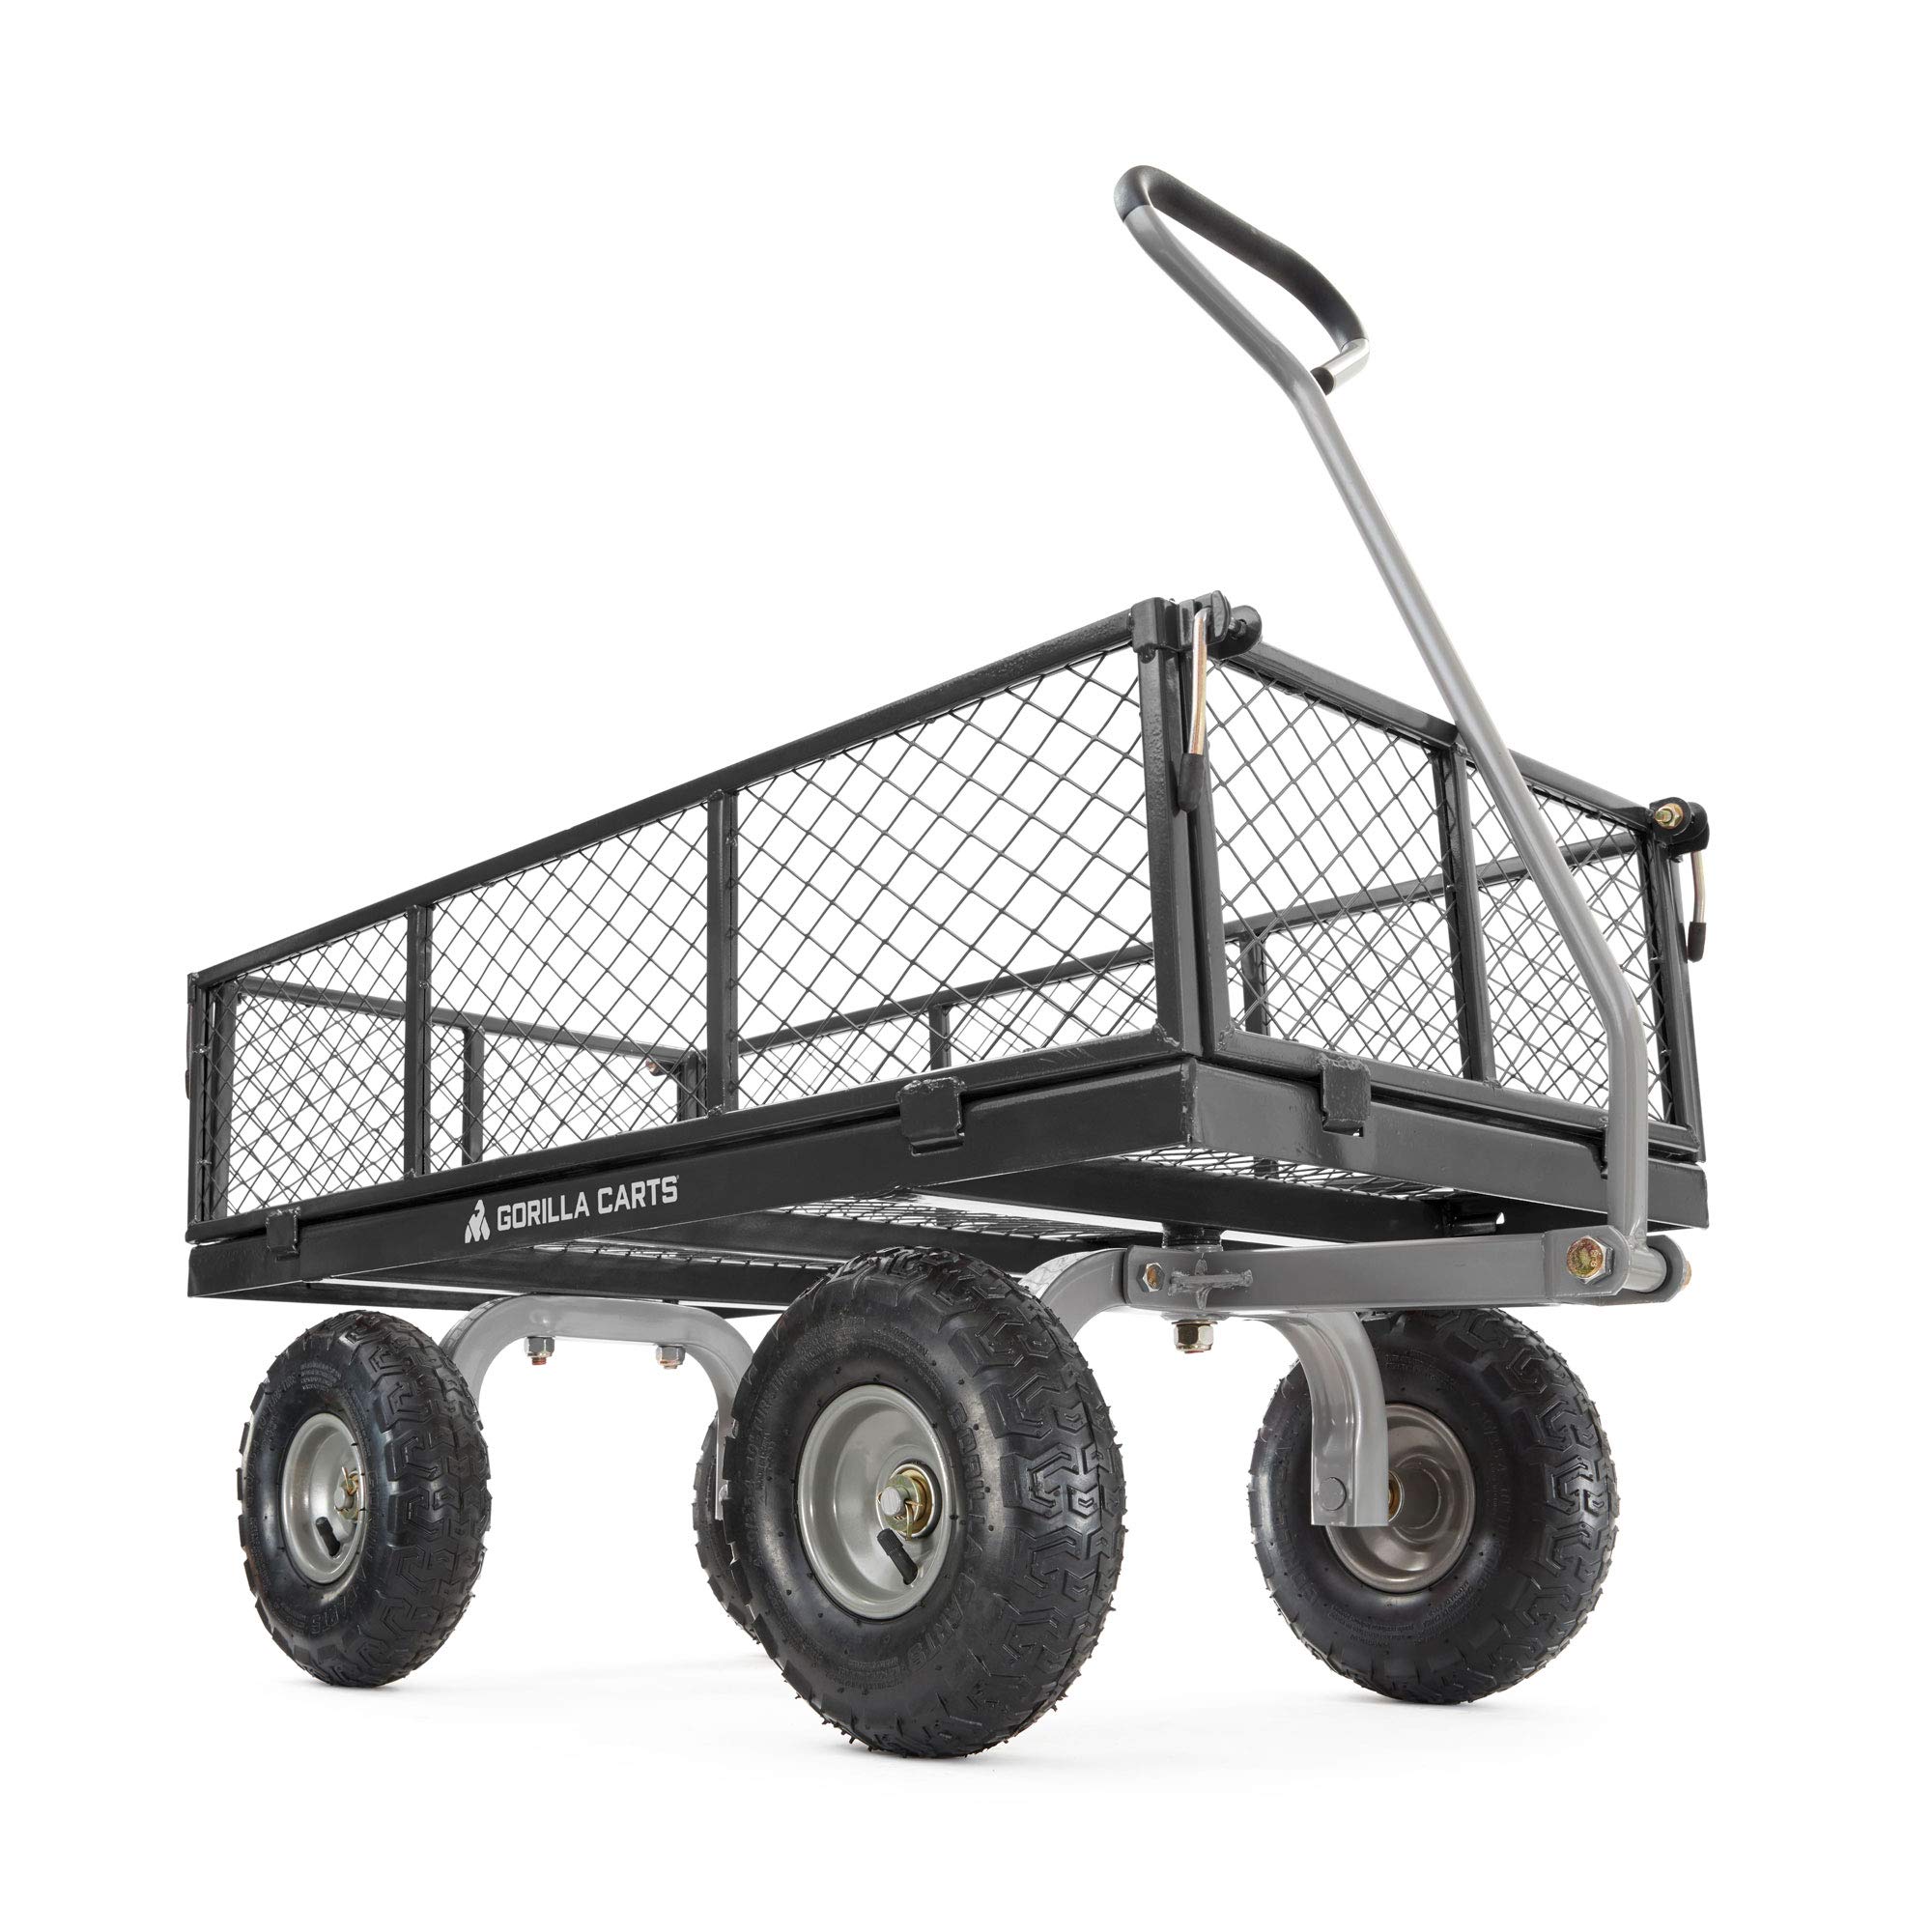 Gorilla Carts 800 Pound Capacity Heavy Duty Durable Steel Mesh Convertible Flatbed Garden Outdoor Hauling Utility Wagon Cart, Black